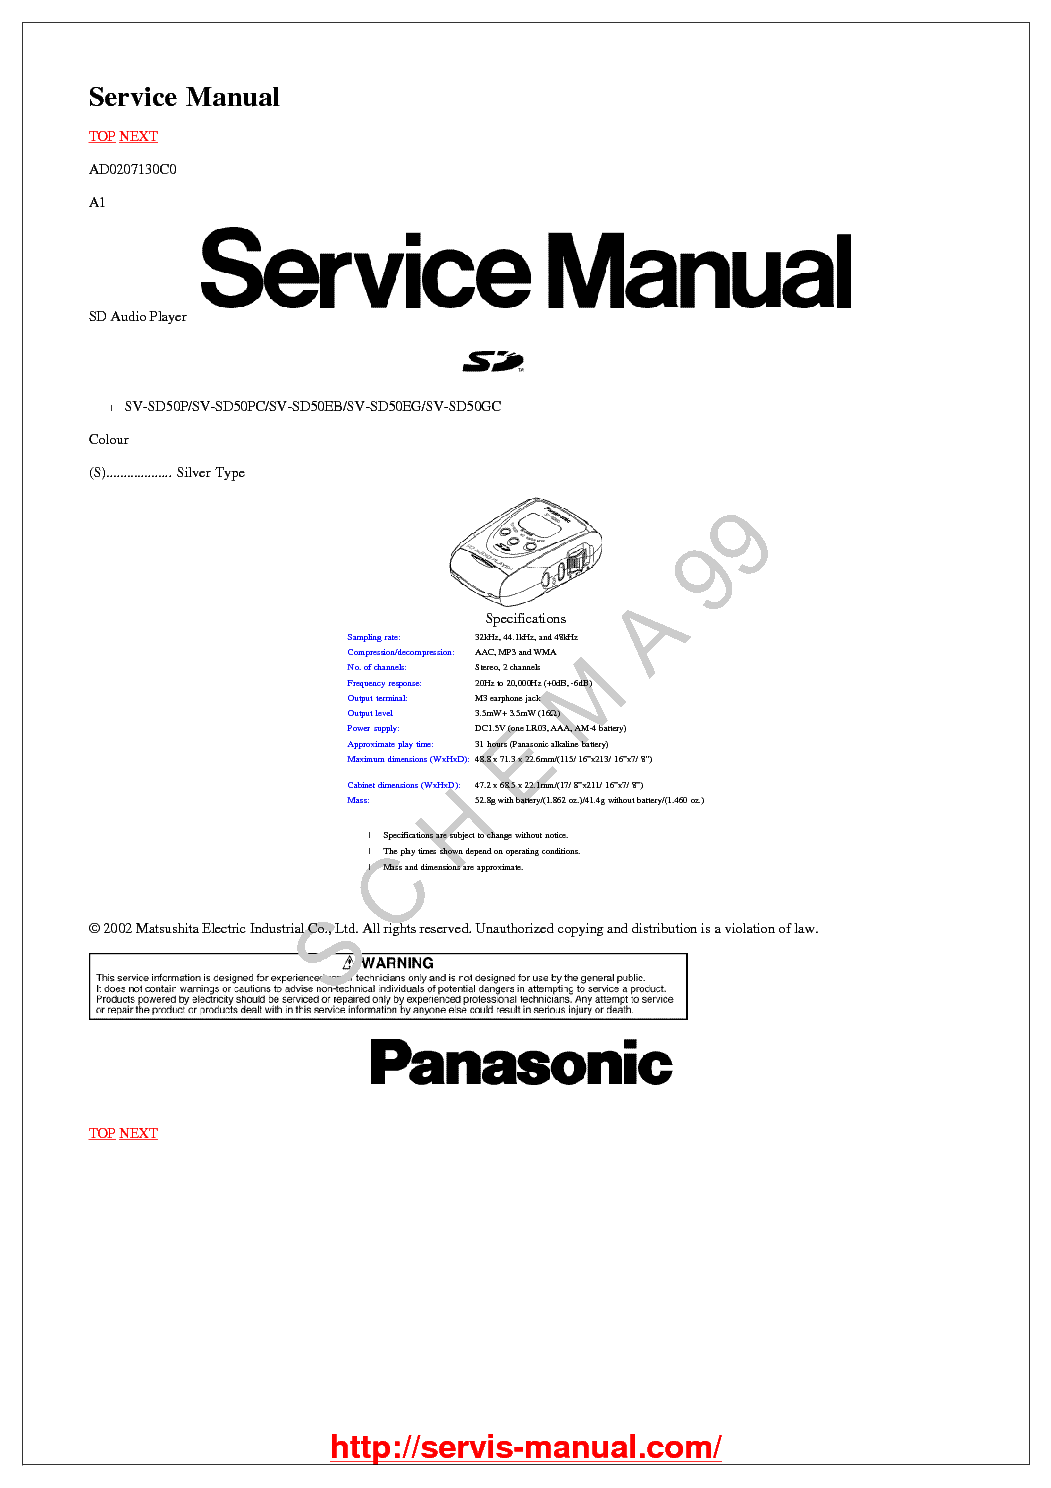 PANASONIC SV-SD-50 service manual (1st page)